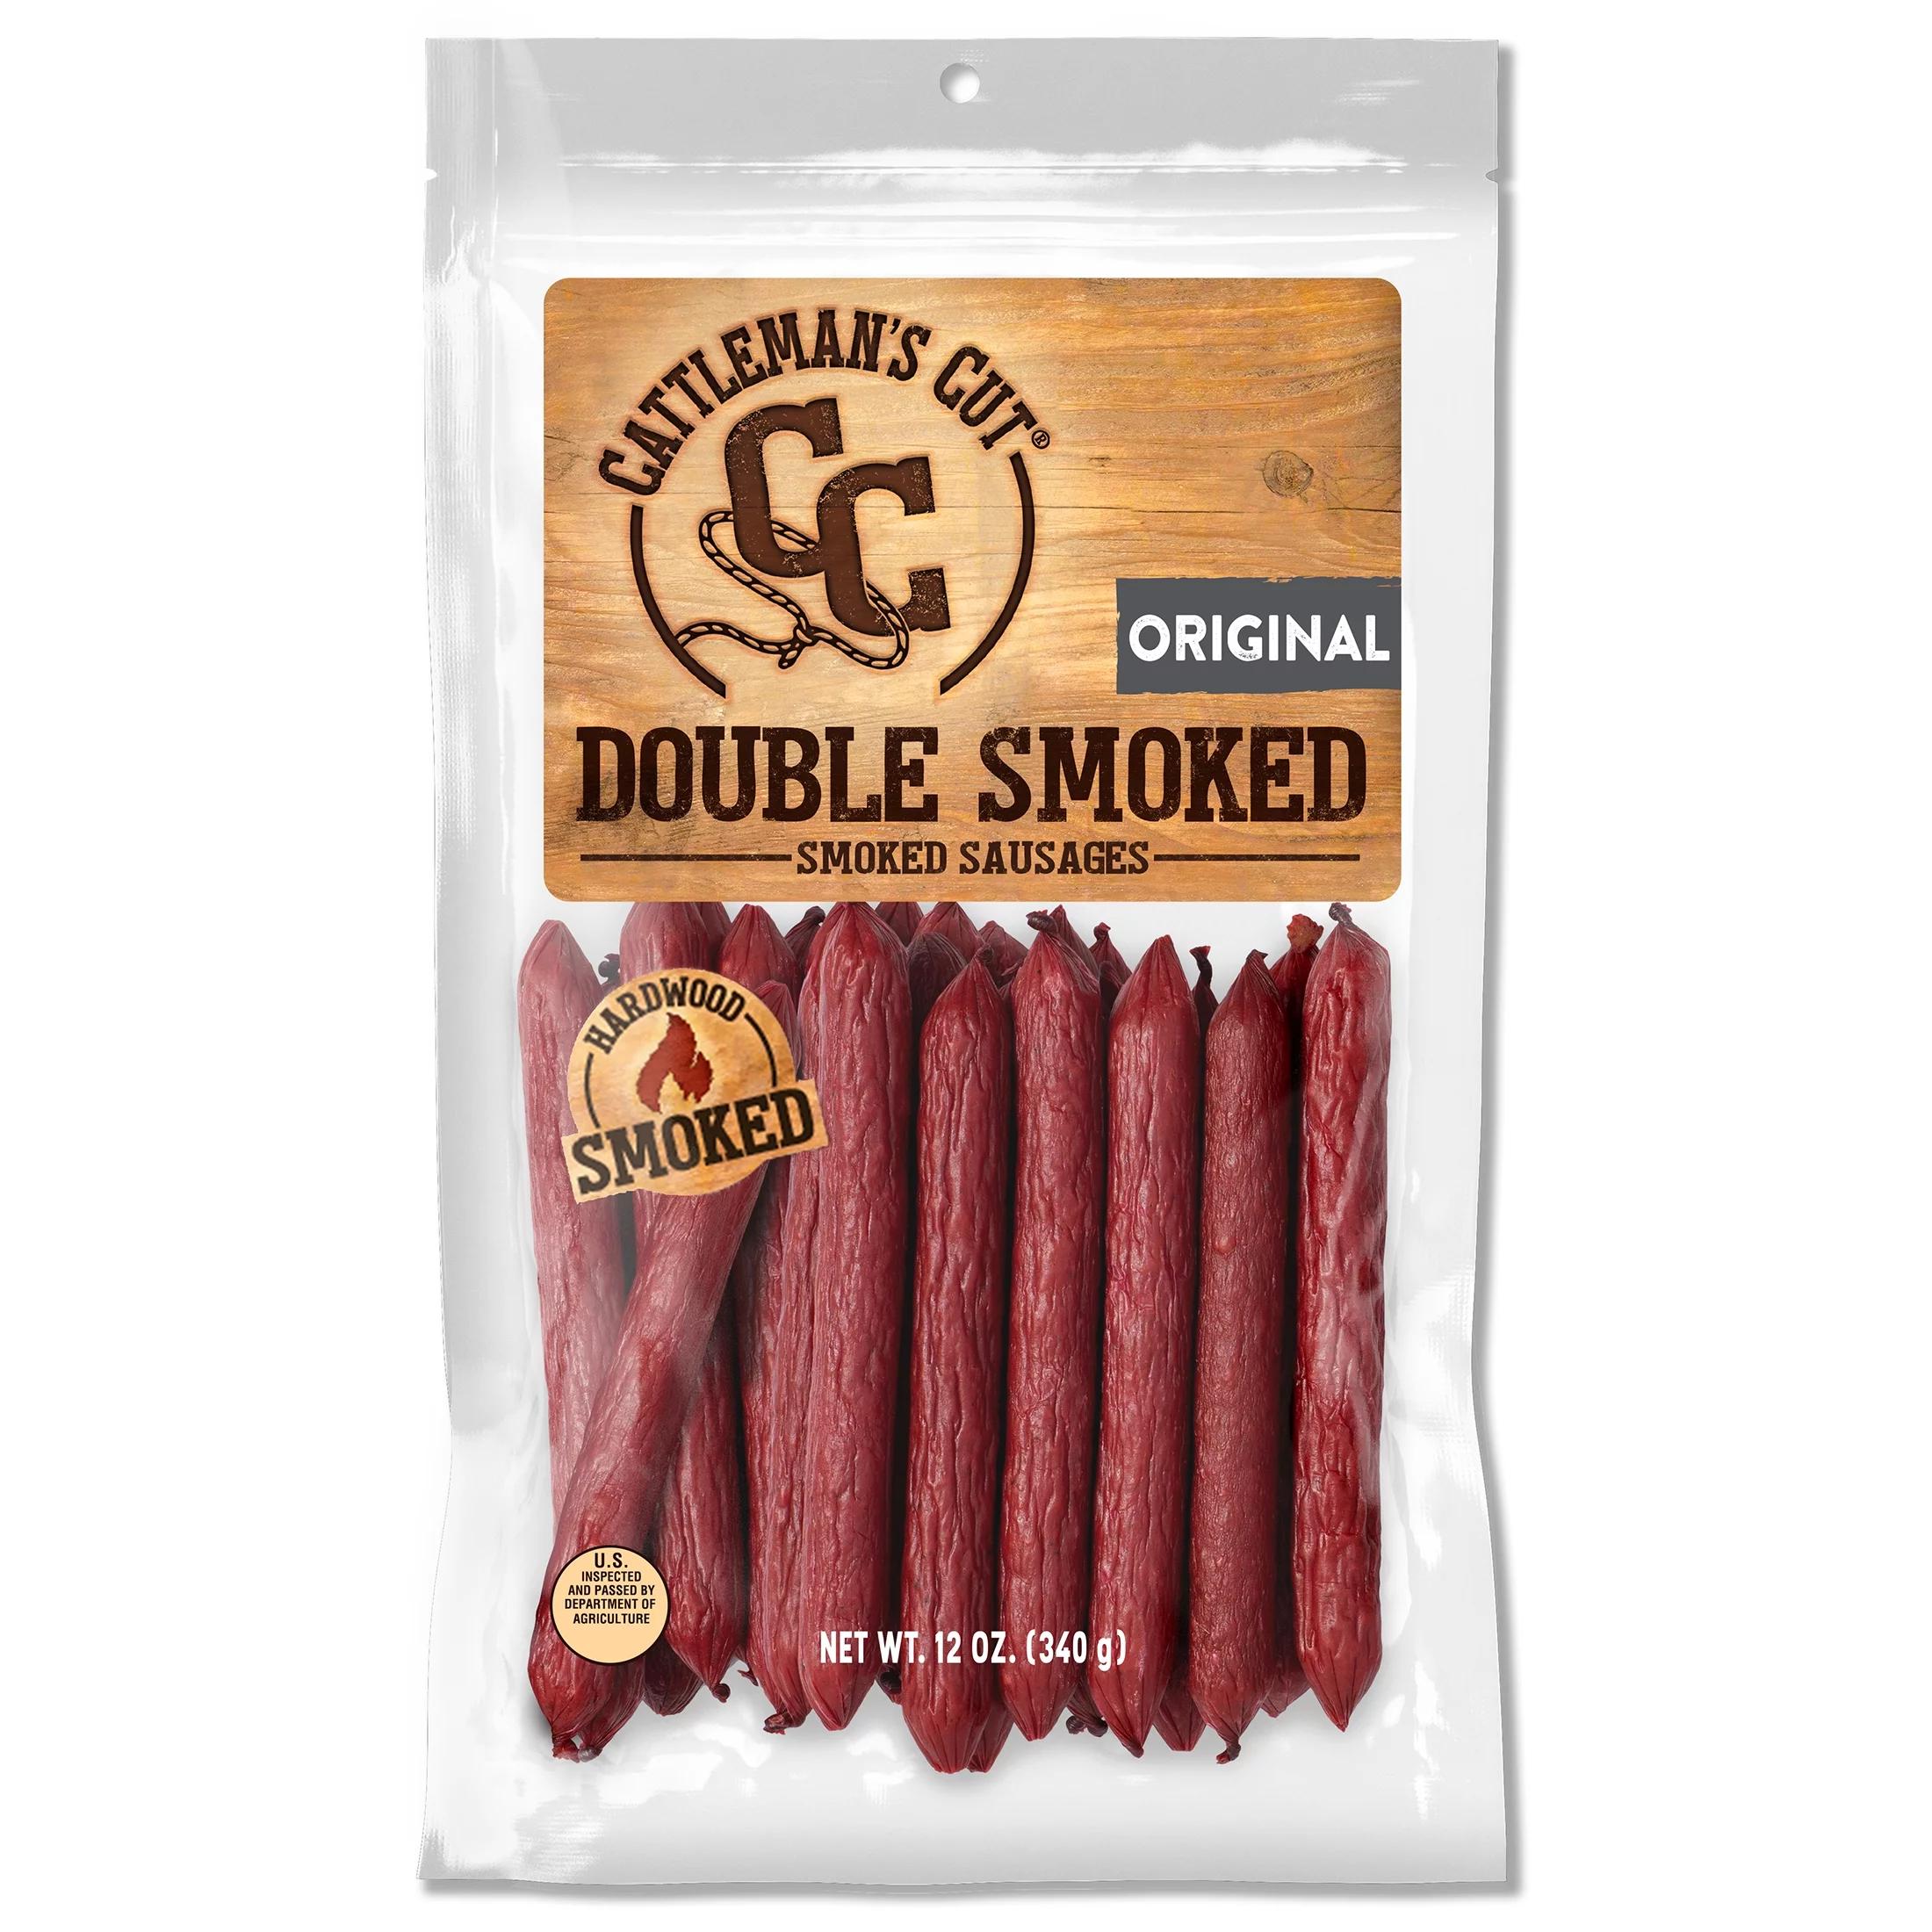 double smoked sausage - Can you smoke sausage twice